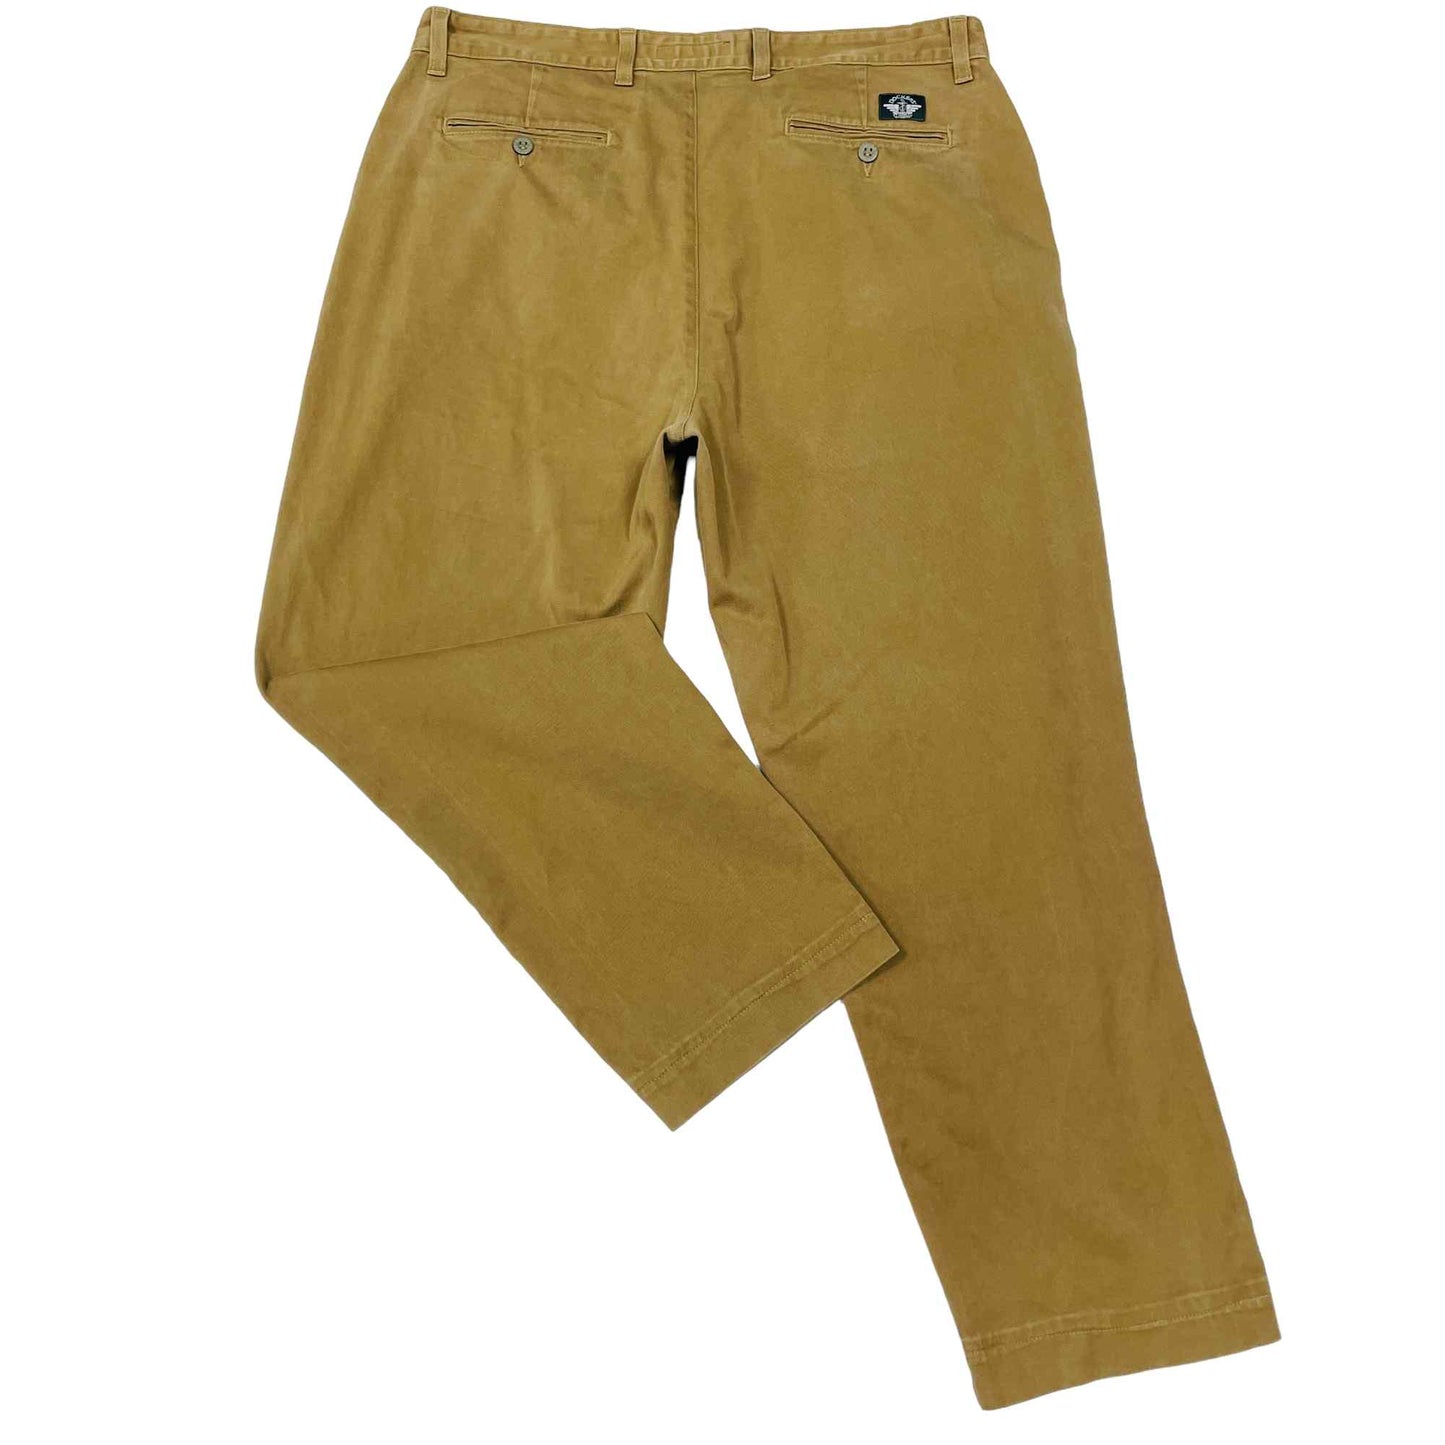 Dockers corduroy pants khakis Vintage 90s These... - Depop